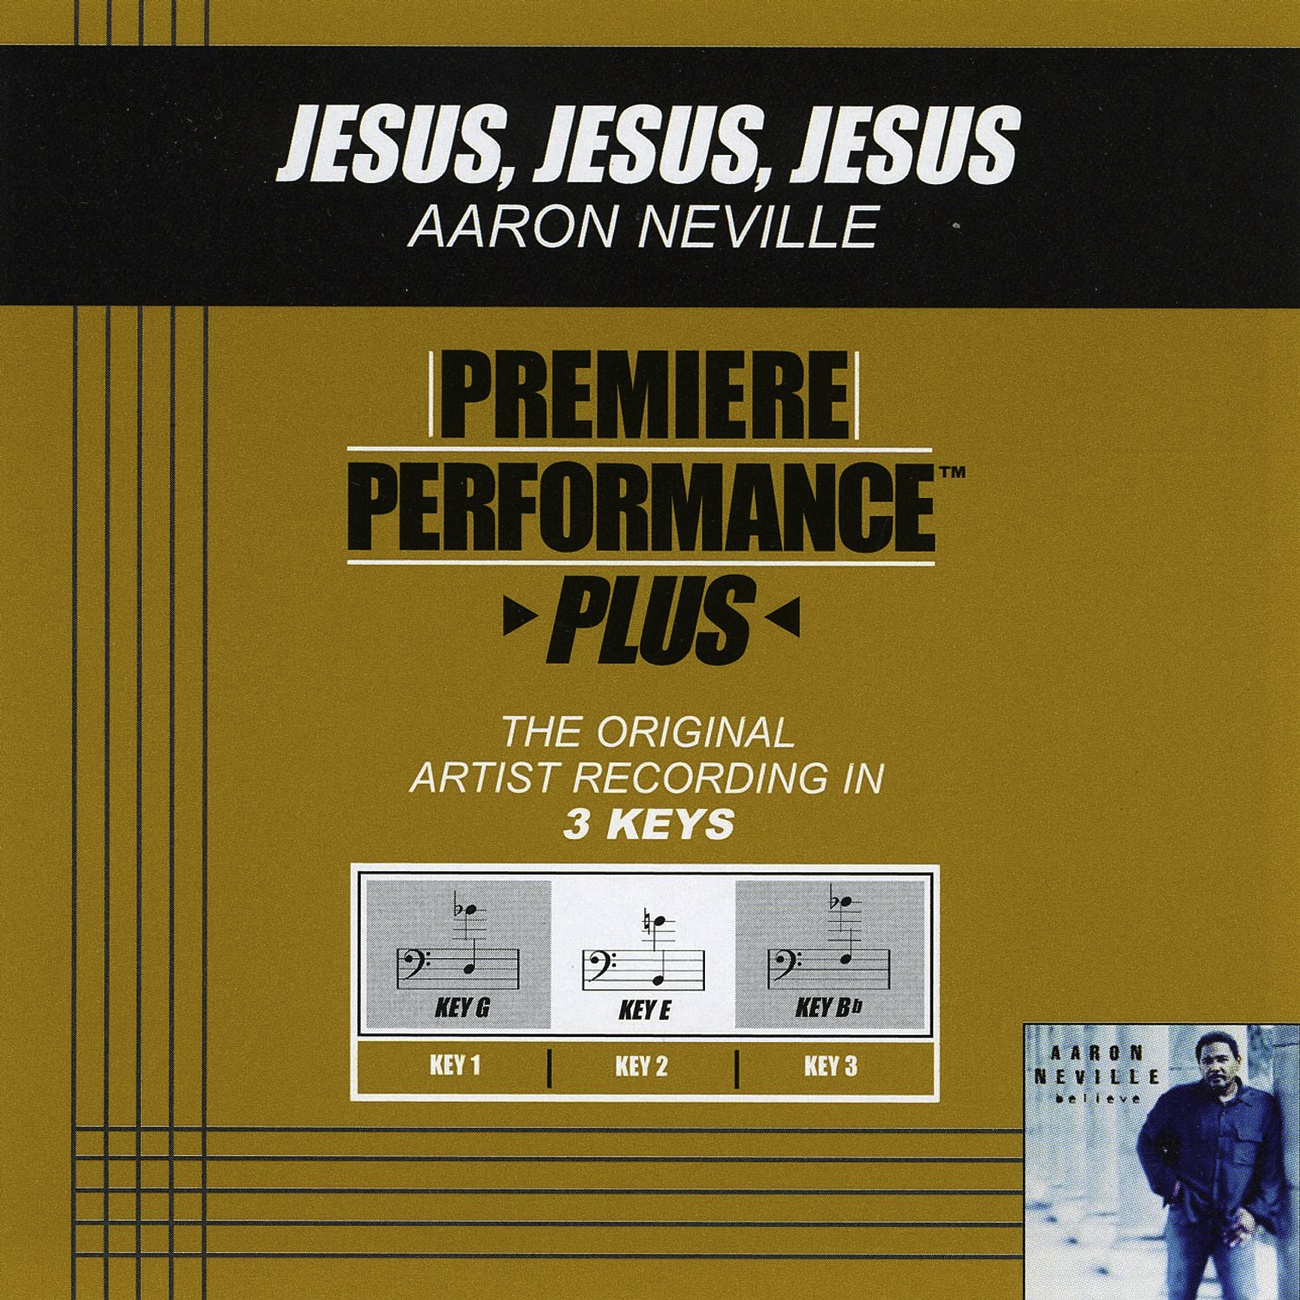 Premiere Performance Plus: Jesus, Jesus, Jesus